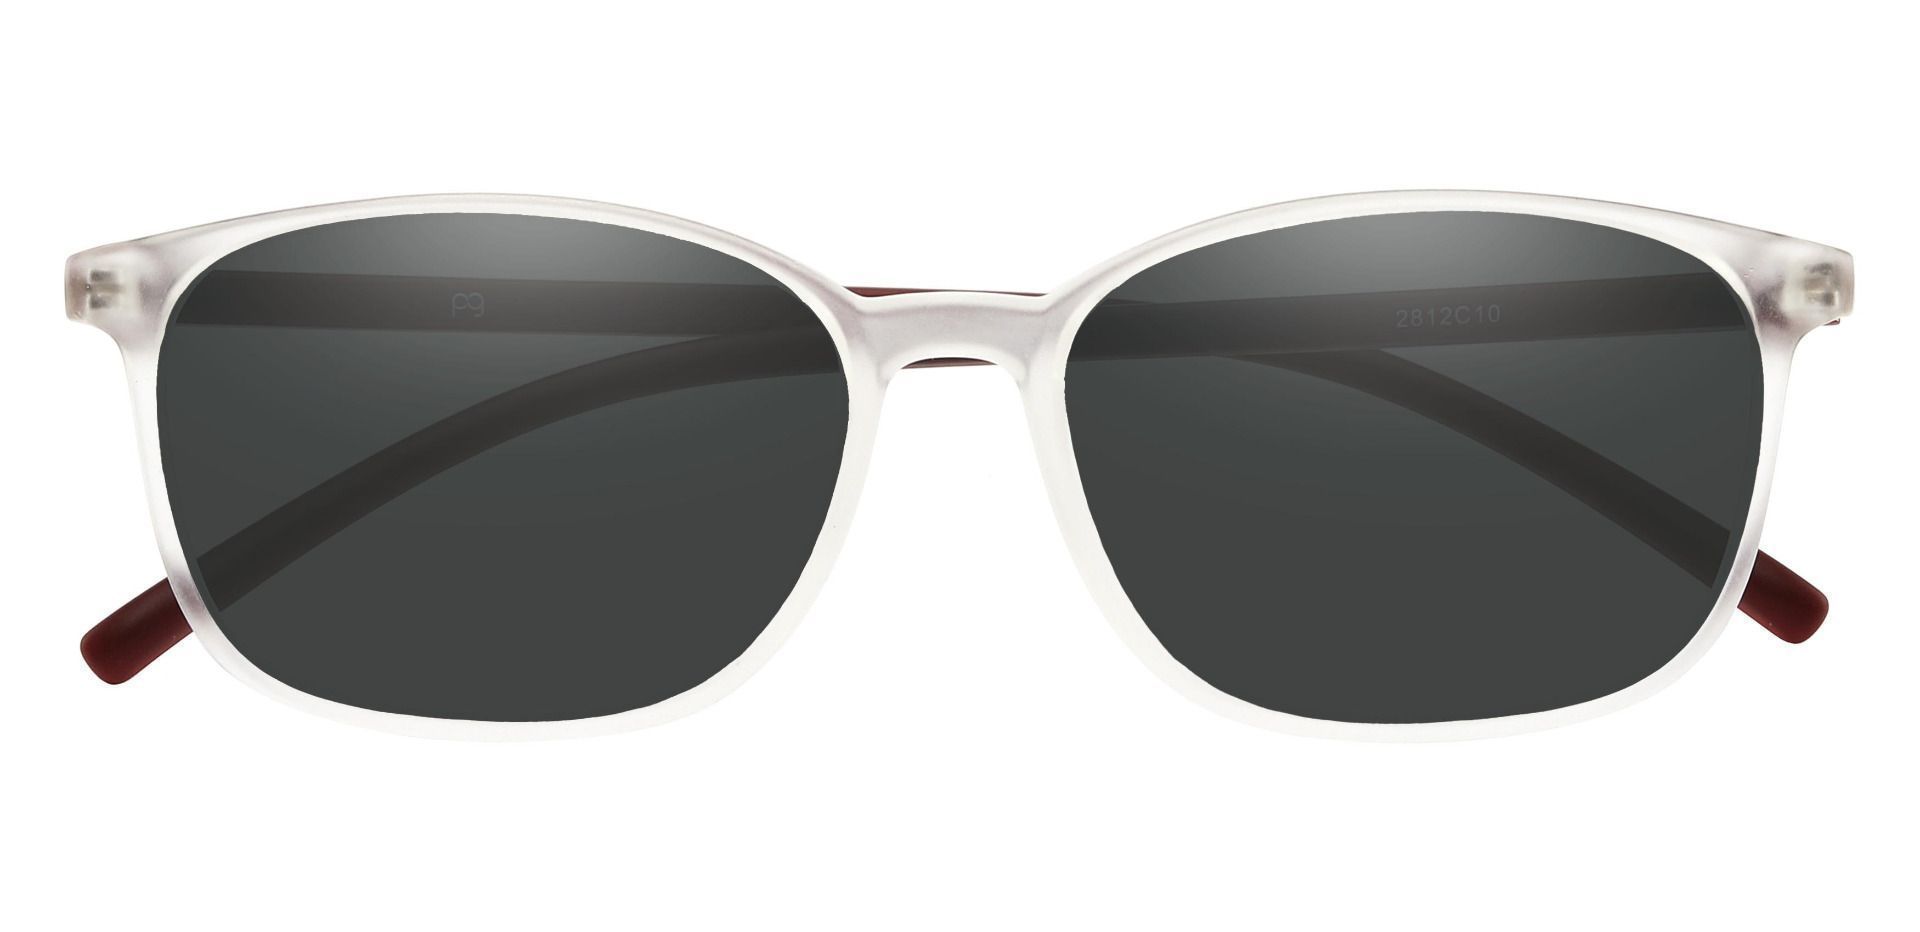 Onyx Square Prescription Sunglasses - Clear Frame With Gray Lenses